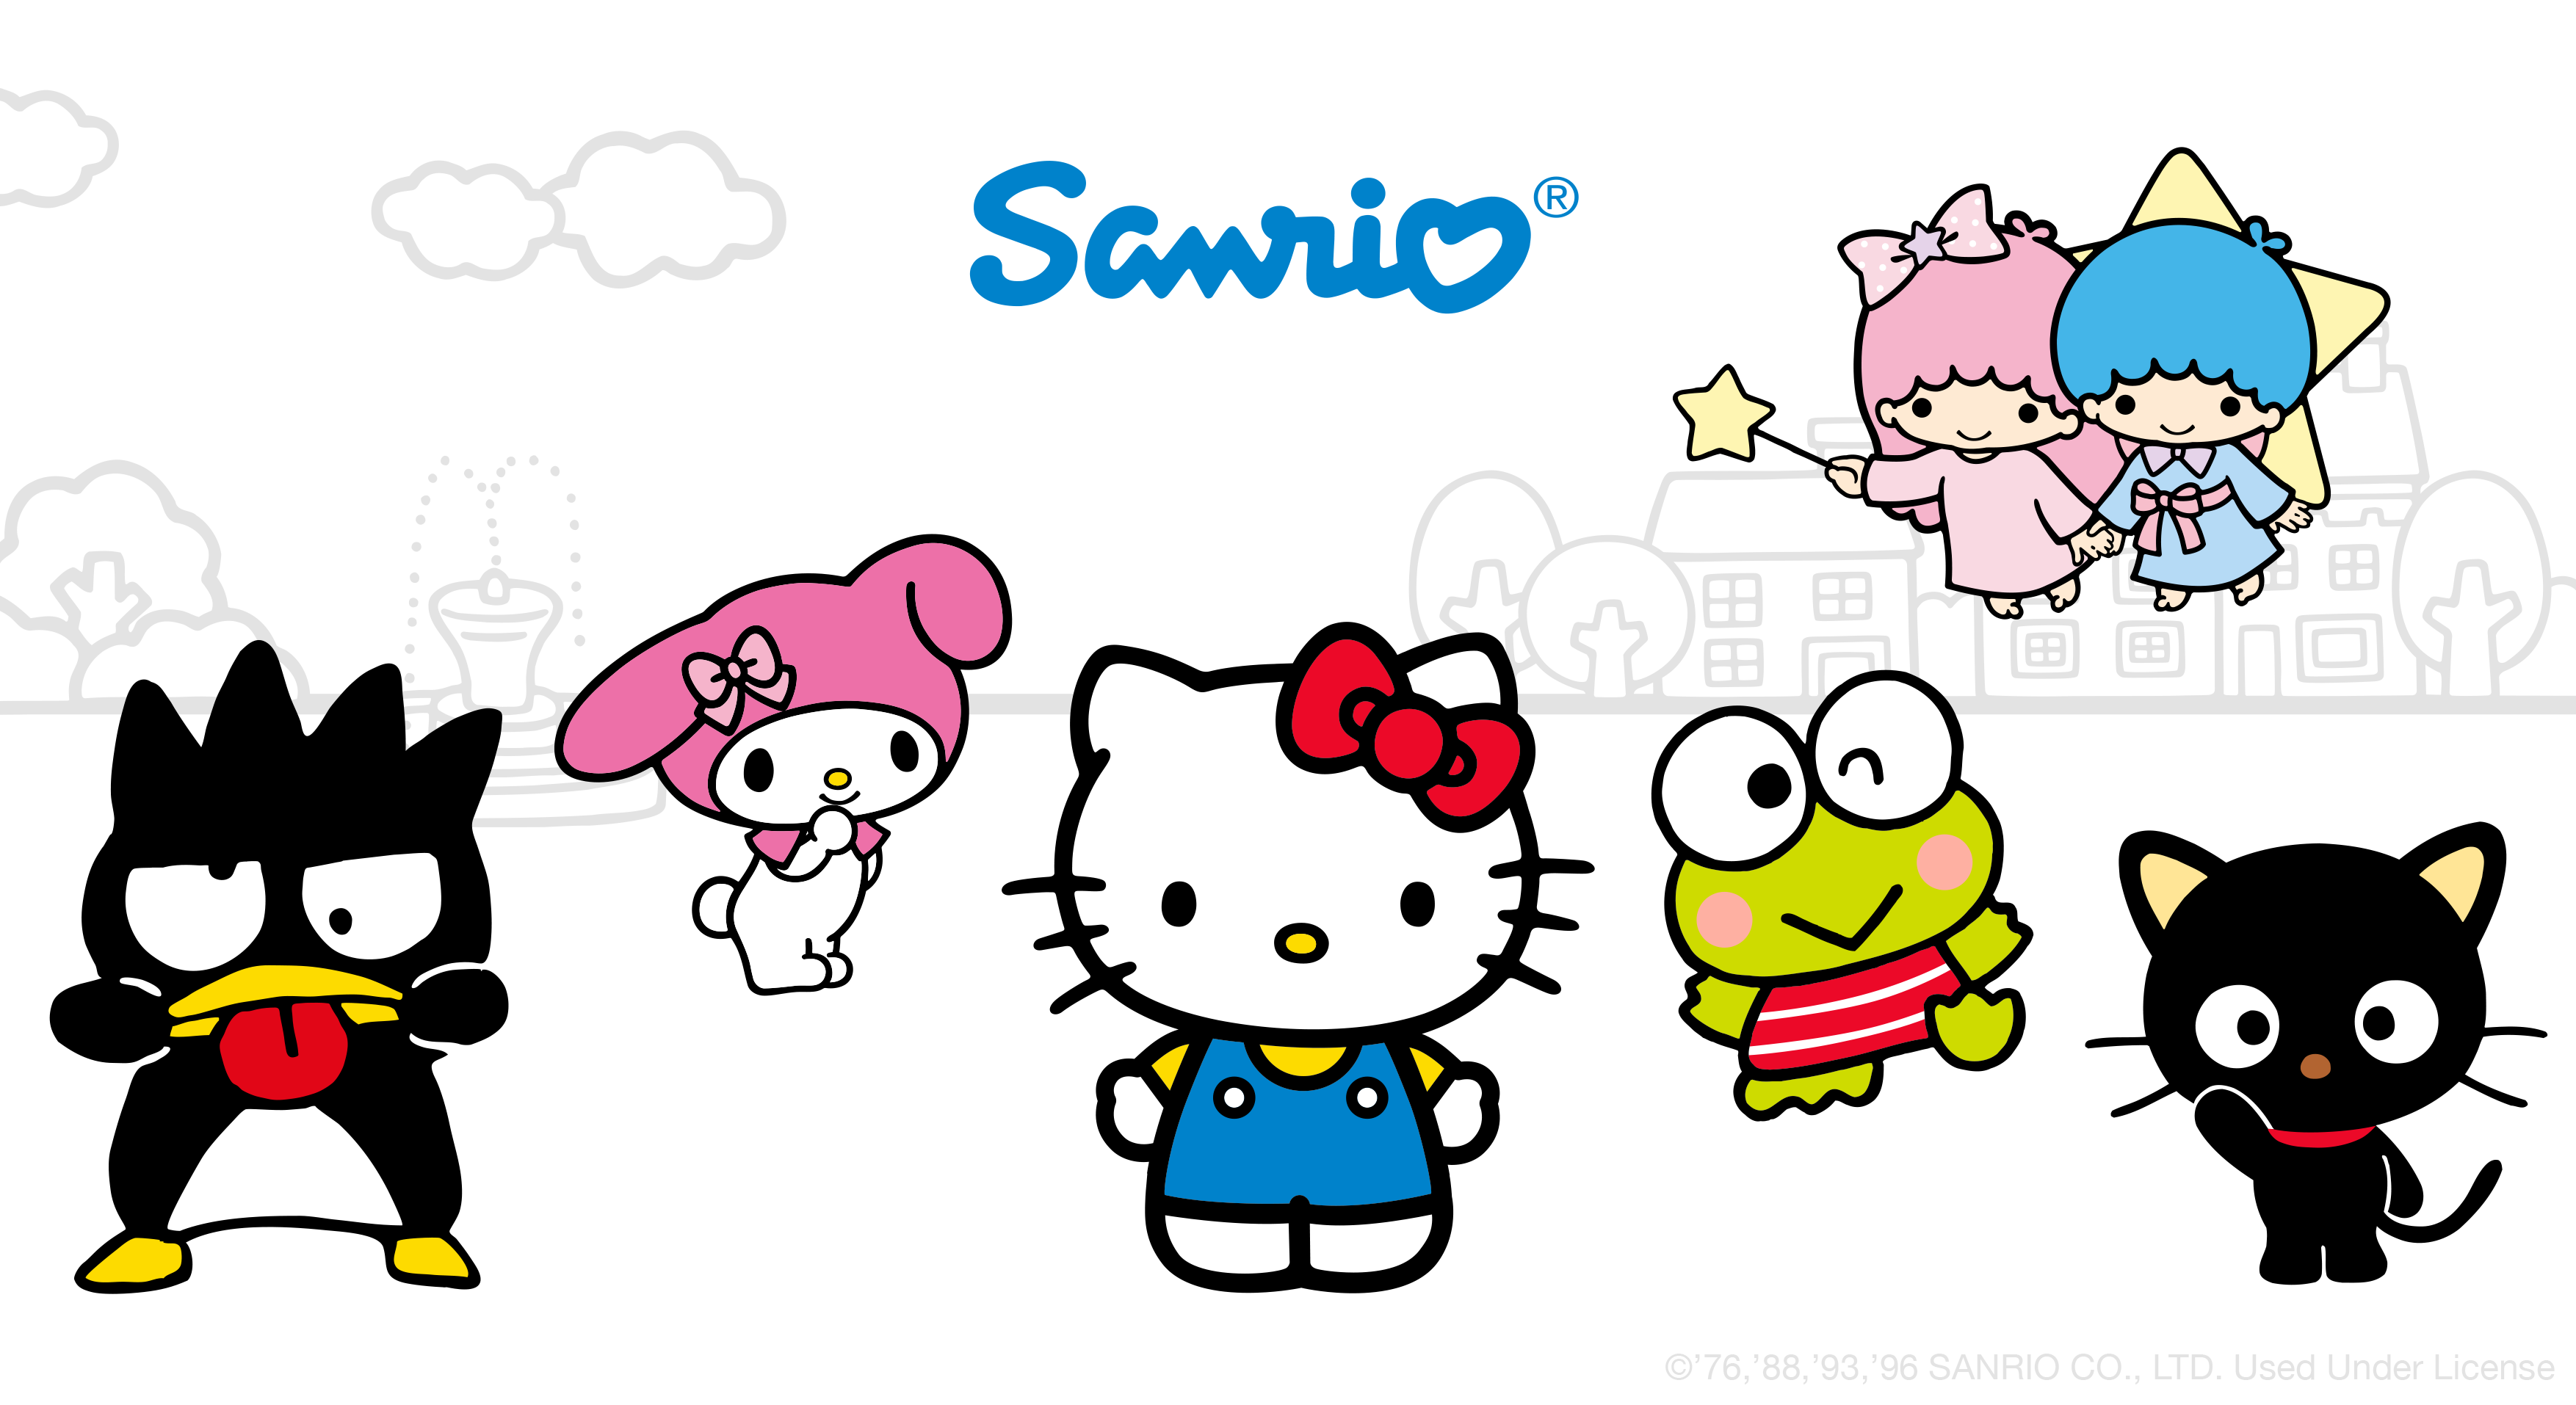 Hello Kitty E Amigos 12 Personagens Sanrio